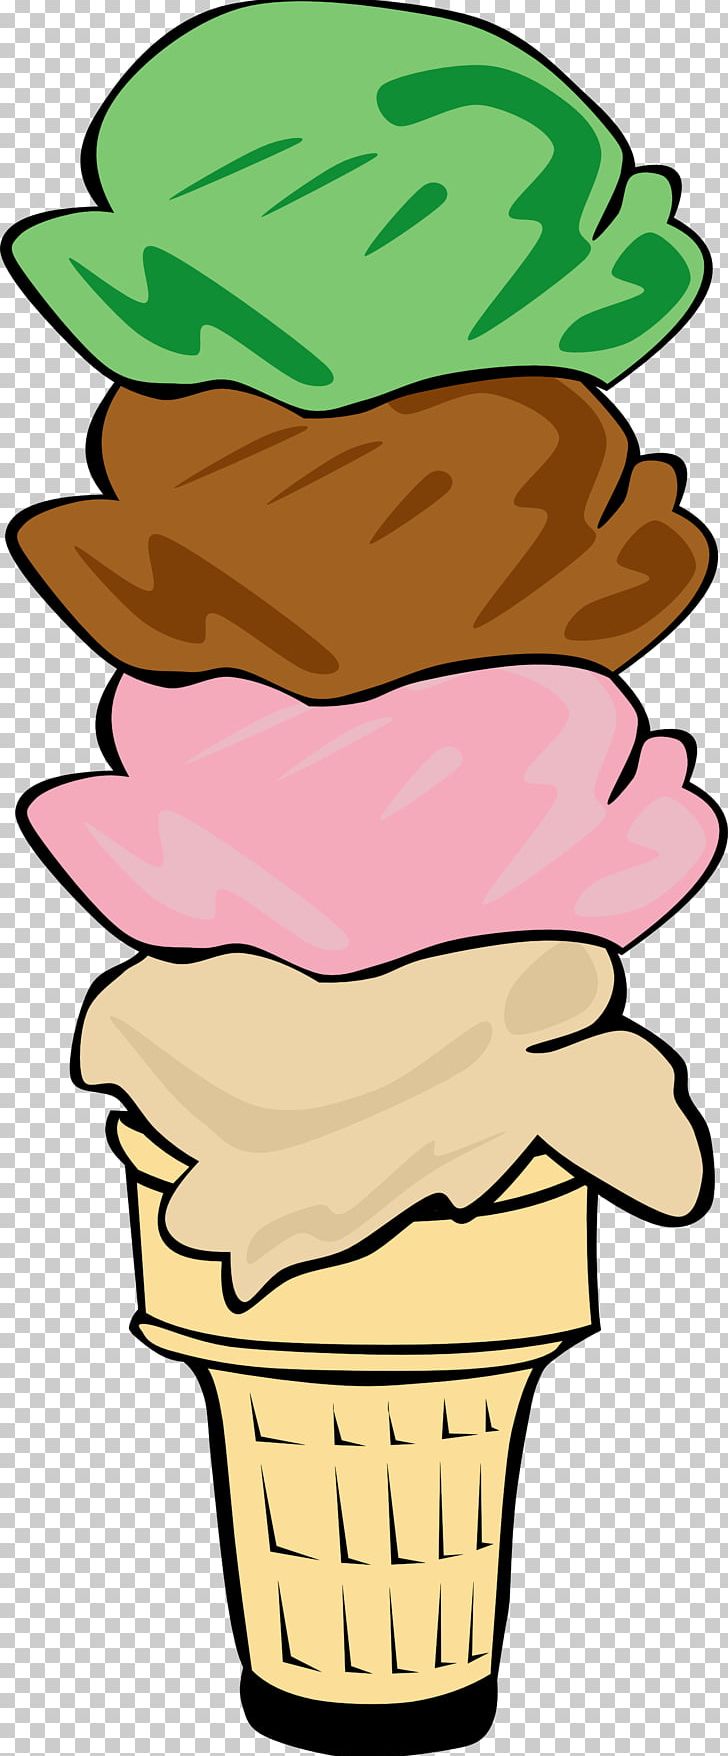 Ice Cream Cone Chocolate Ice Cream Strawberry Ice Cream PNG, Clipart, Artwork, Bowl, Chocolate Ice Cream, Cream, Food Free PNG Download